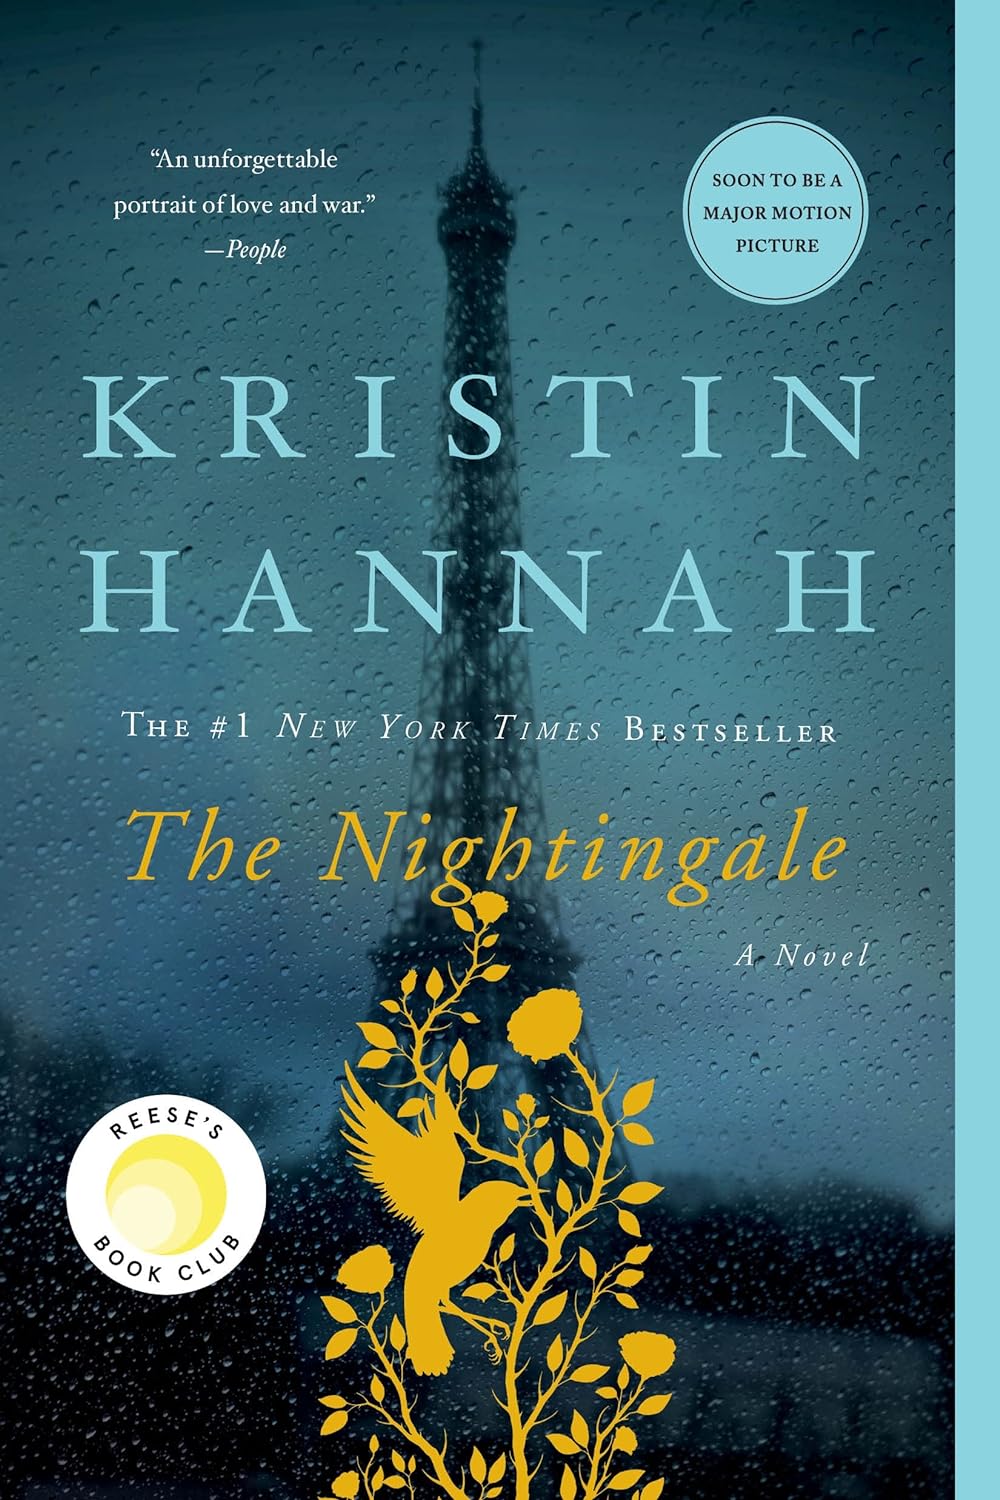 The Nightingale: A Novel     Paperback – April 25, 2017